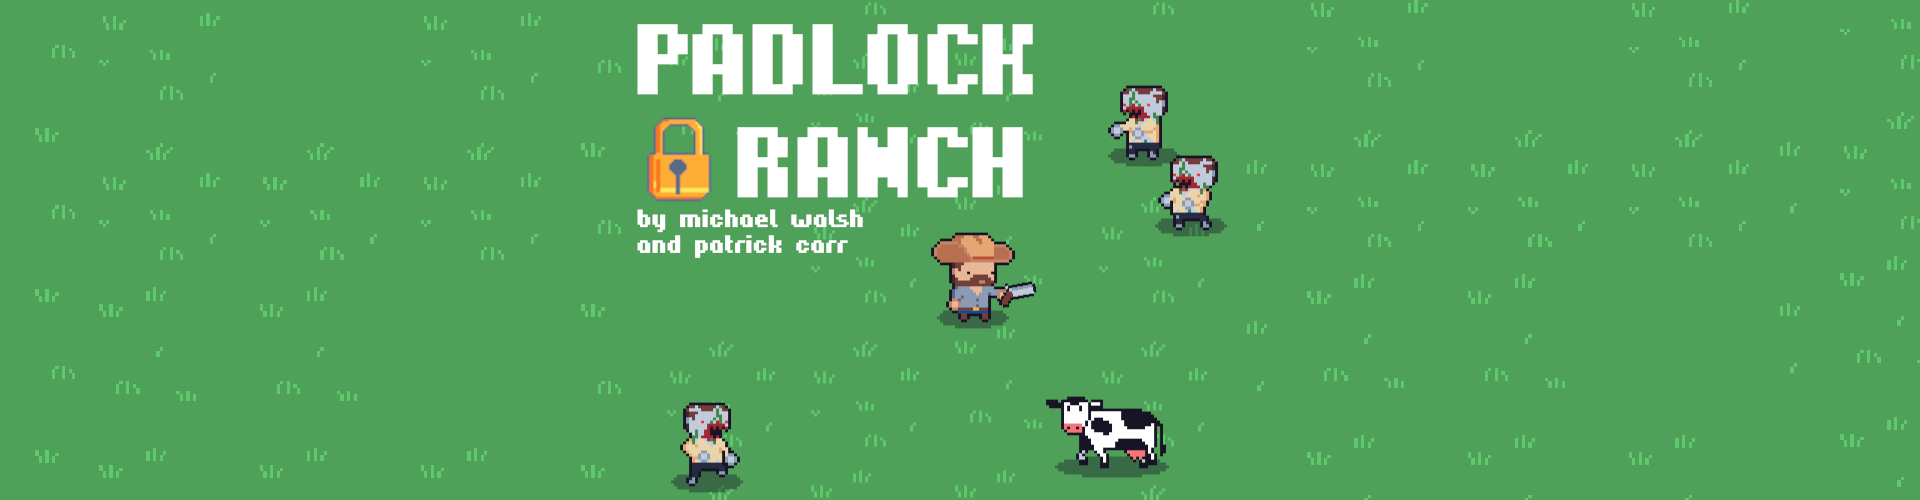 Padlock Ranch